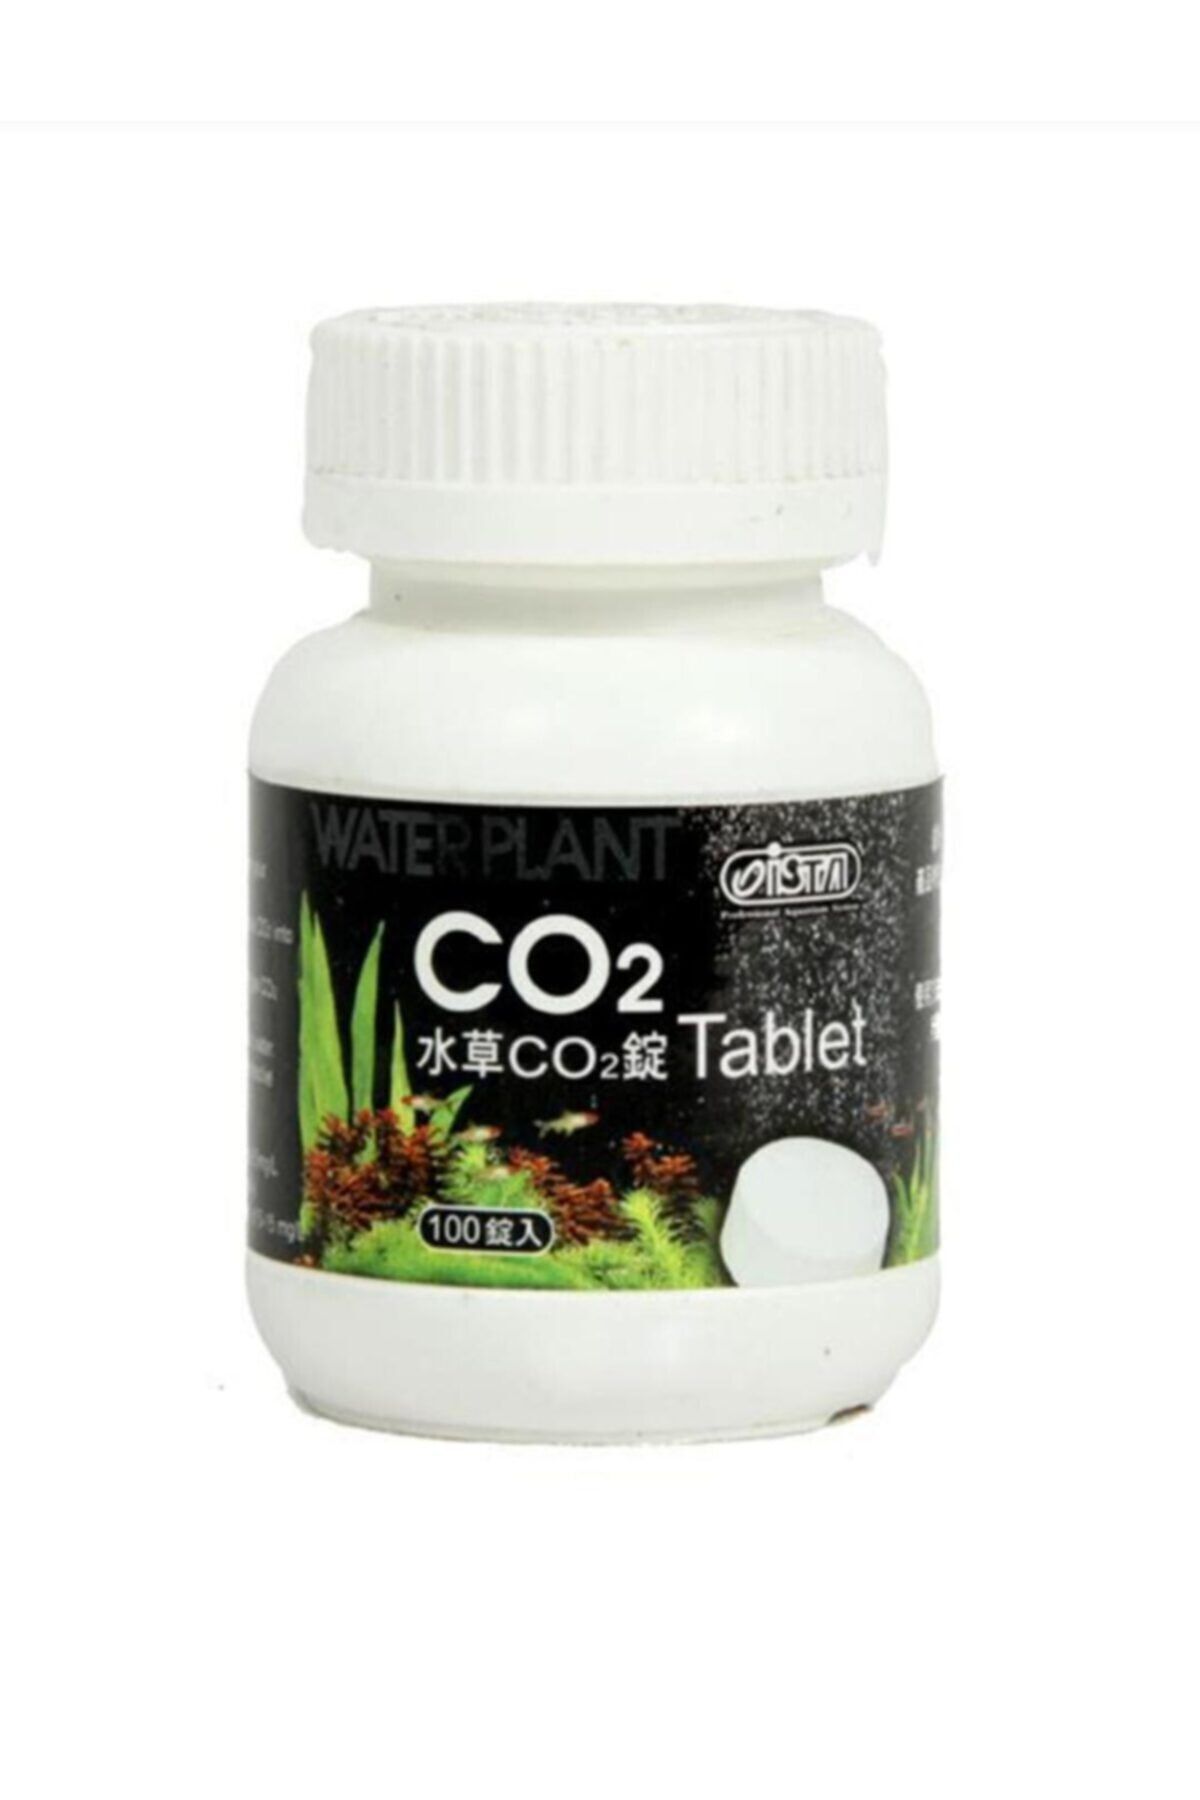 Ista Co2 Tablet Bitkili Akvaryum Karbondioksit Tableti 100 Adet